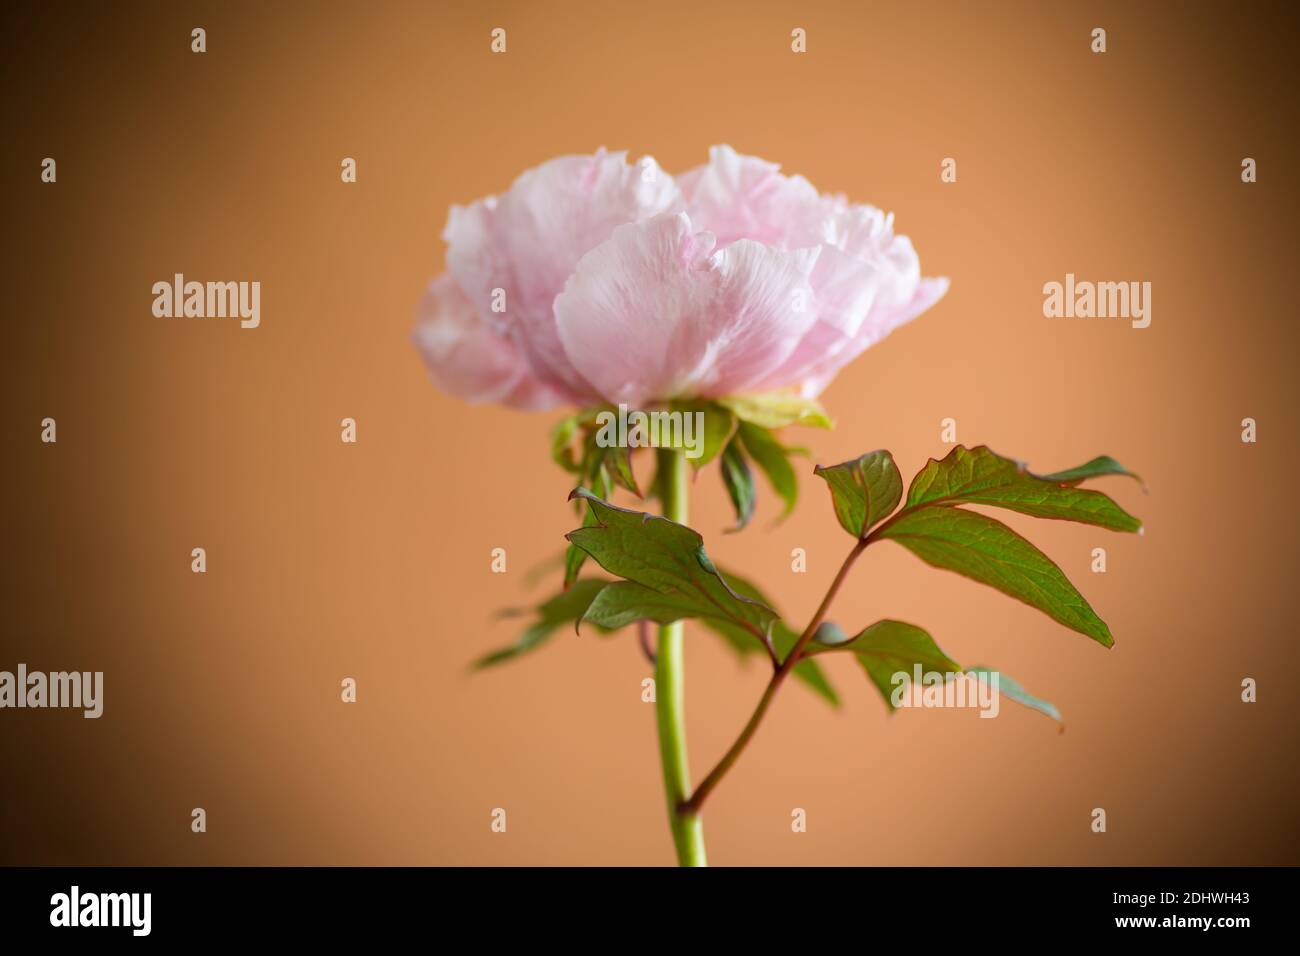 blooming pink tree-like peony flower isolated on orange background Stock Photo